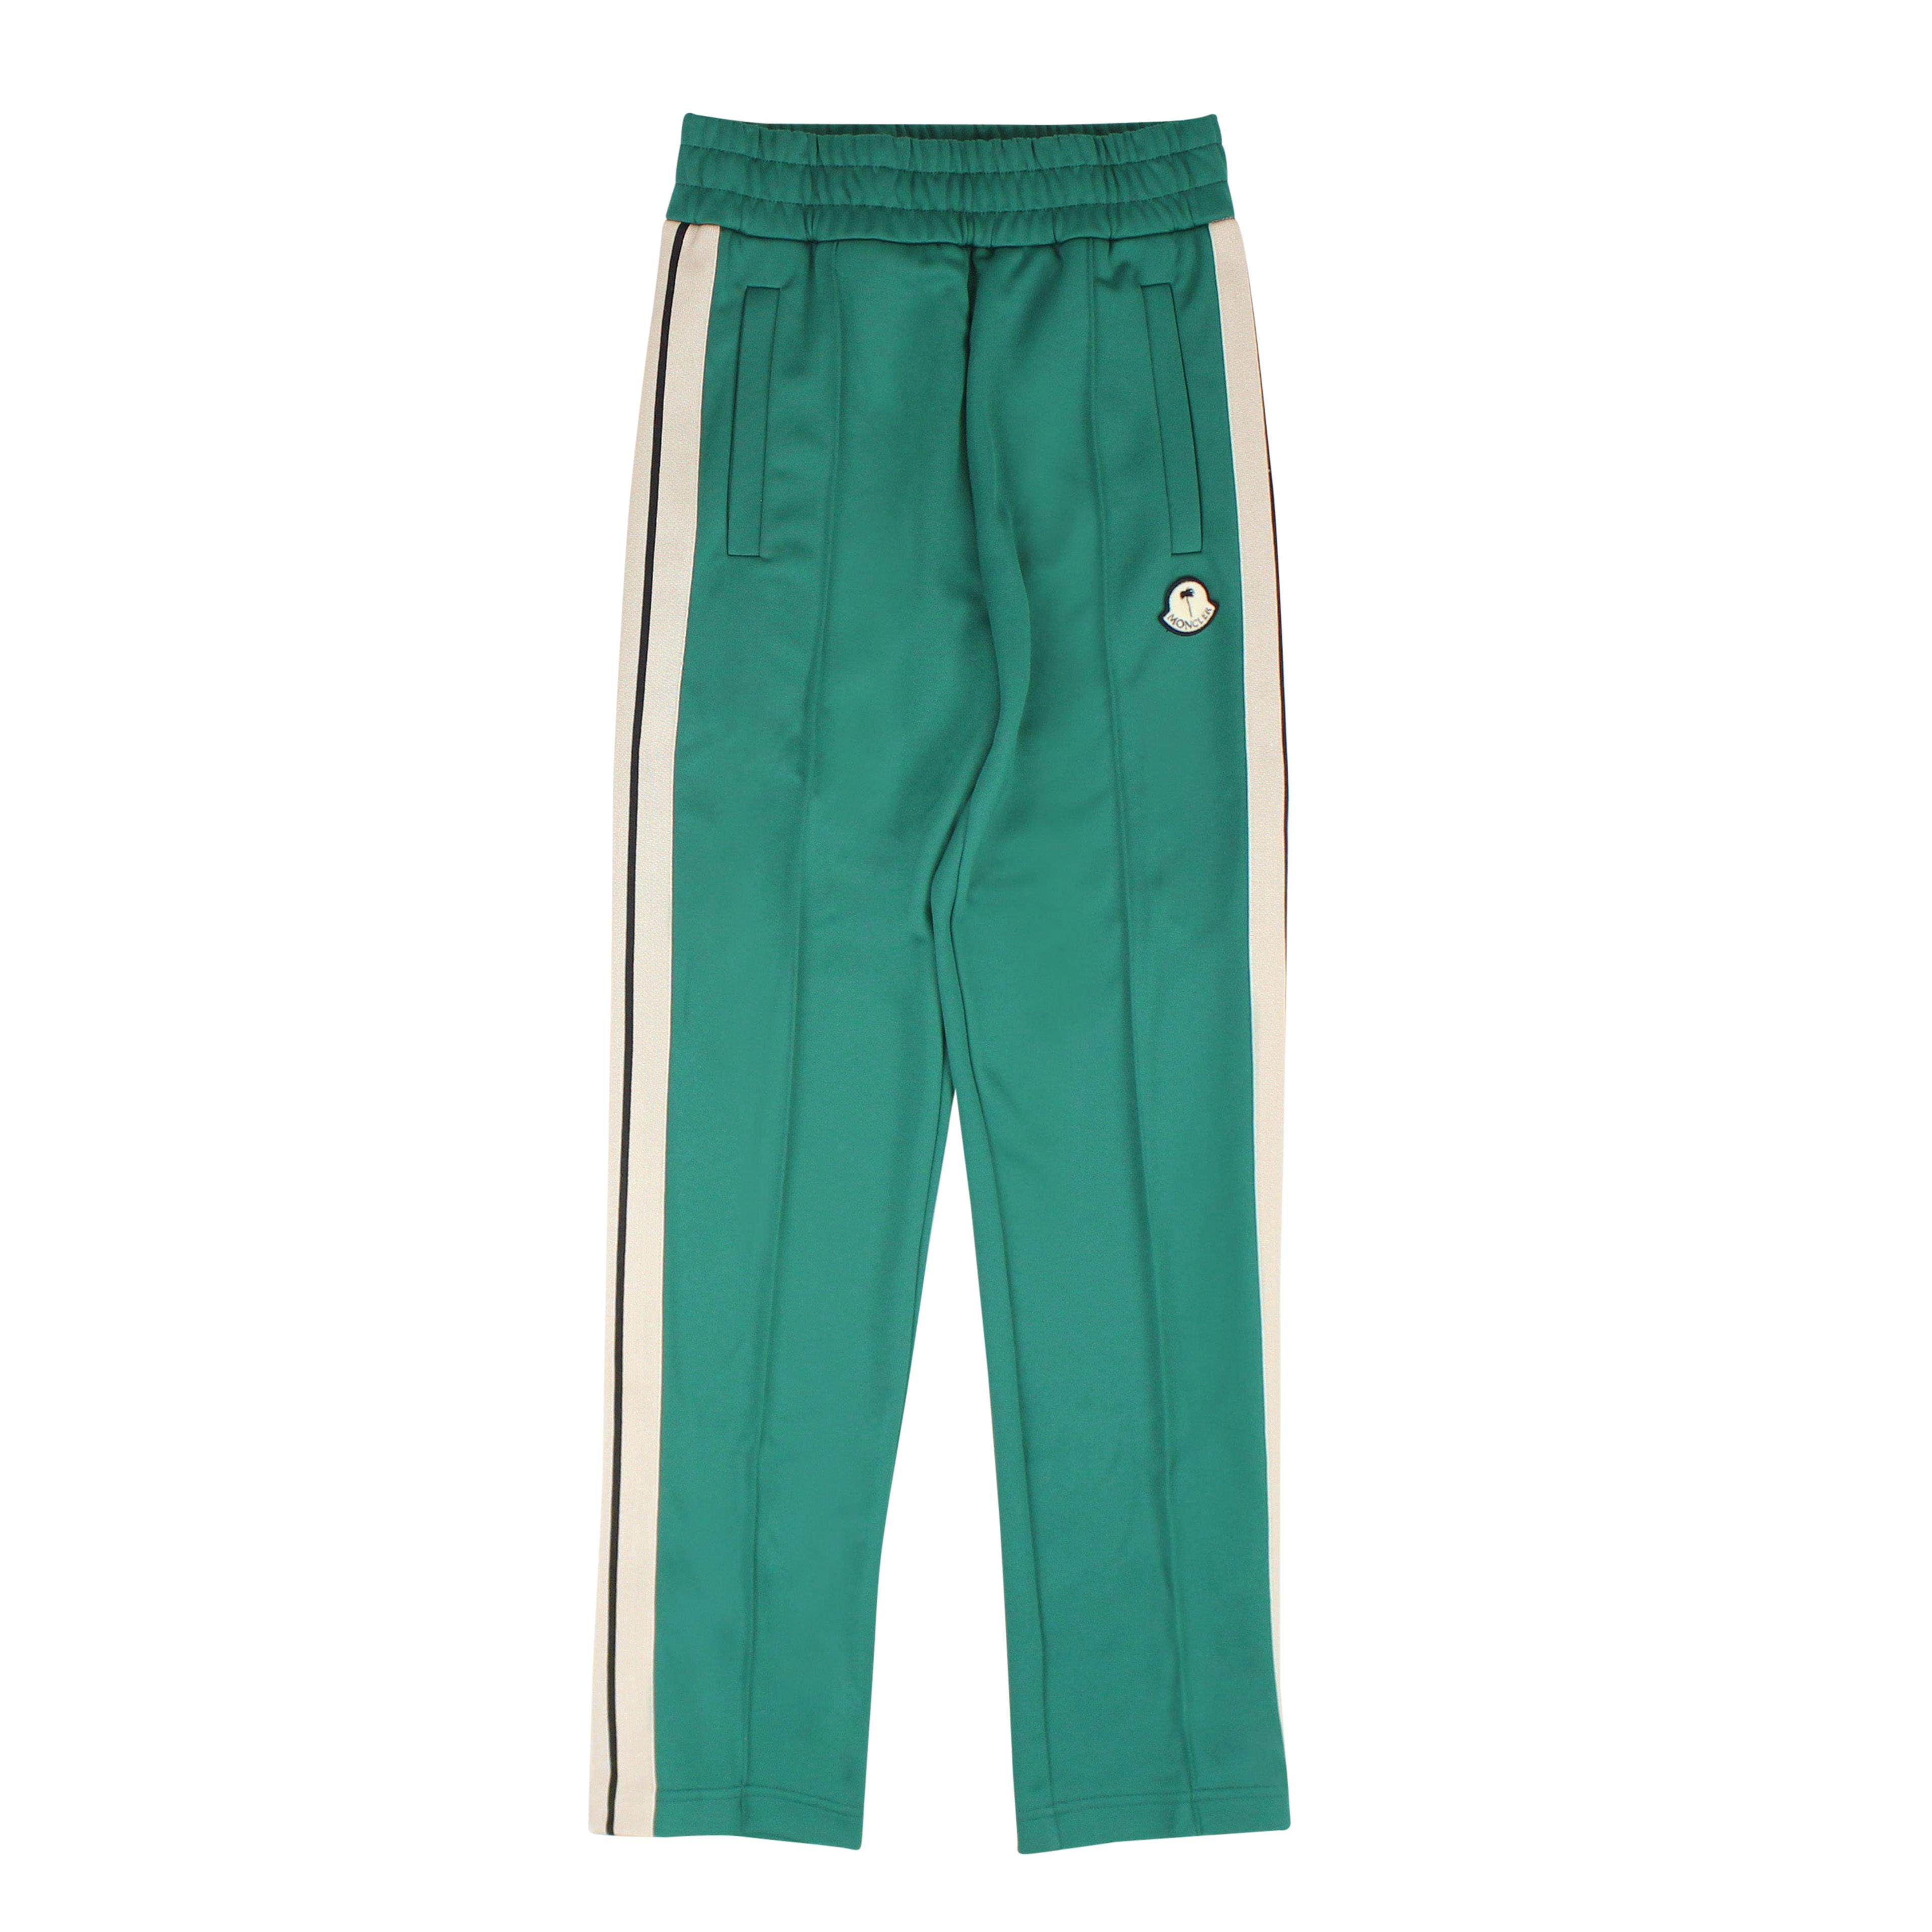 x Green Moncler Track Pants